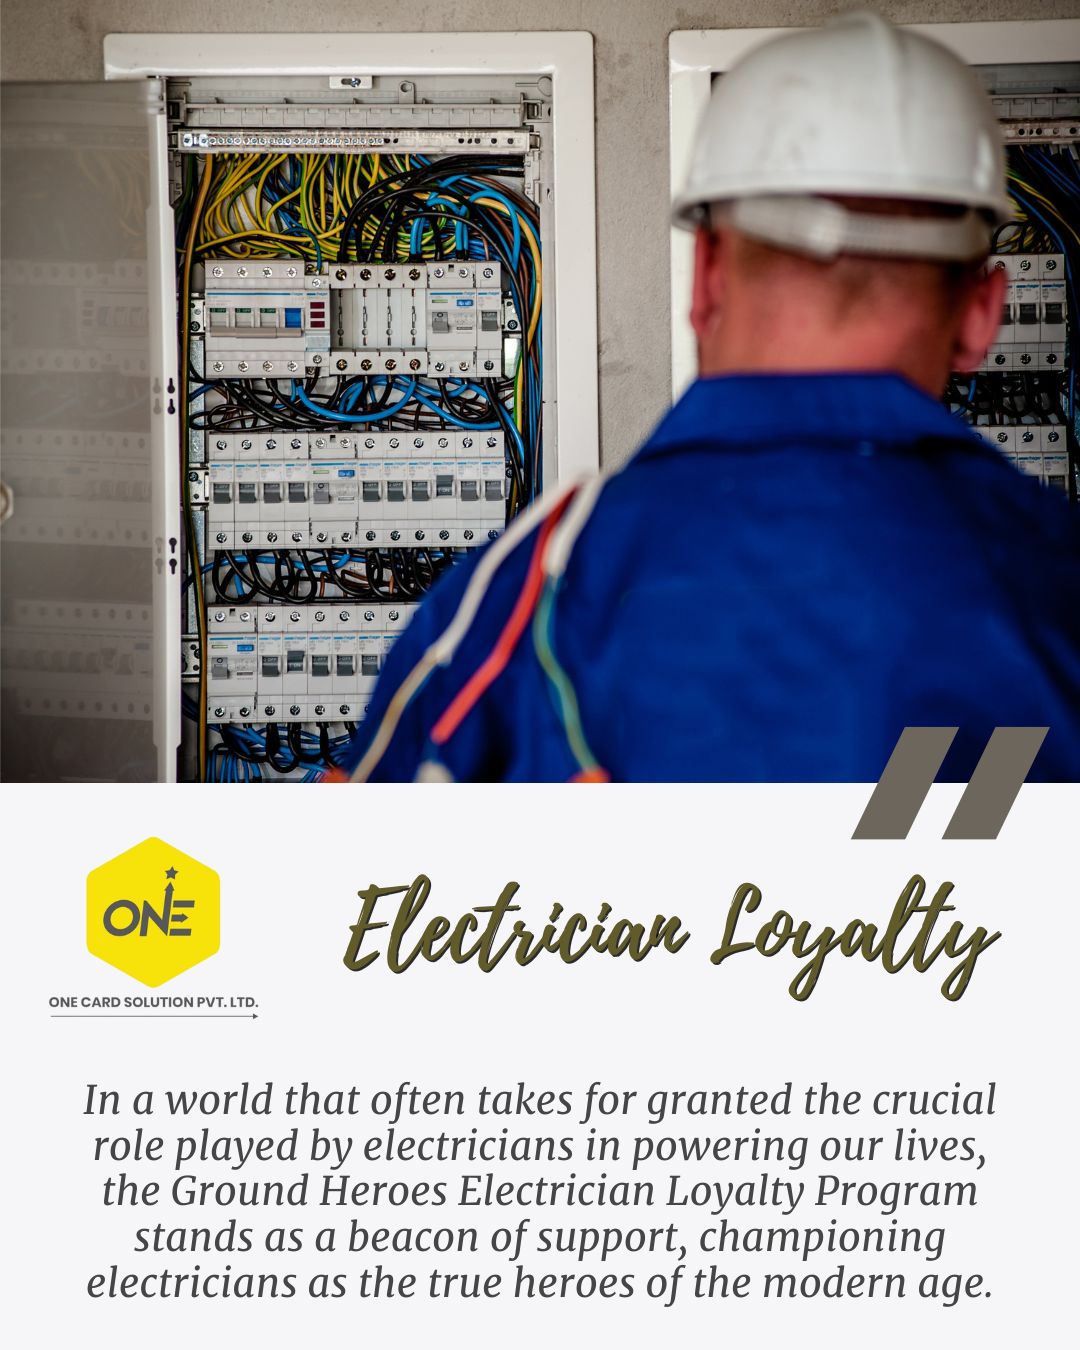 Ground Heroes Electrician Loyalty Program